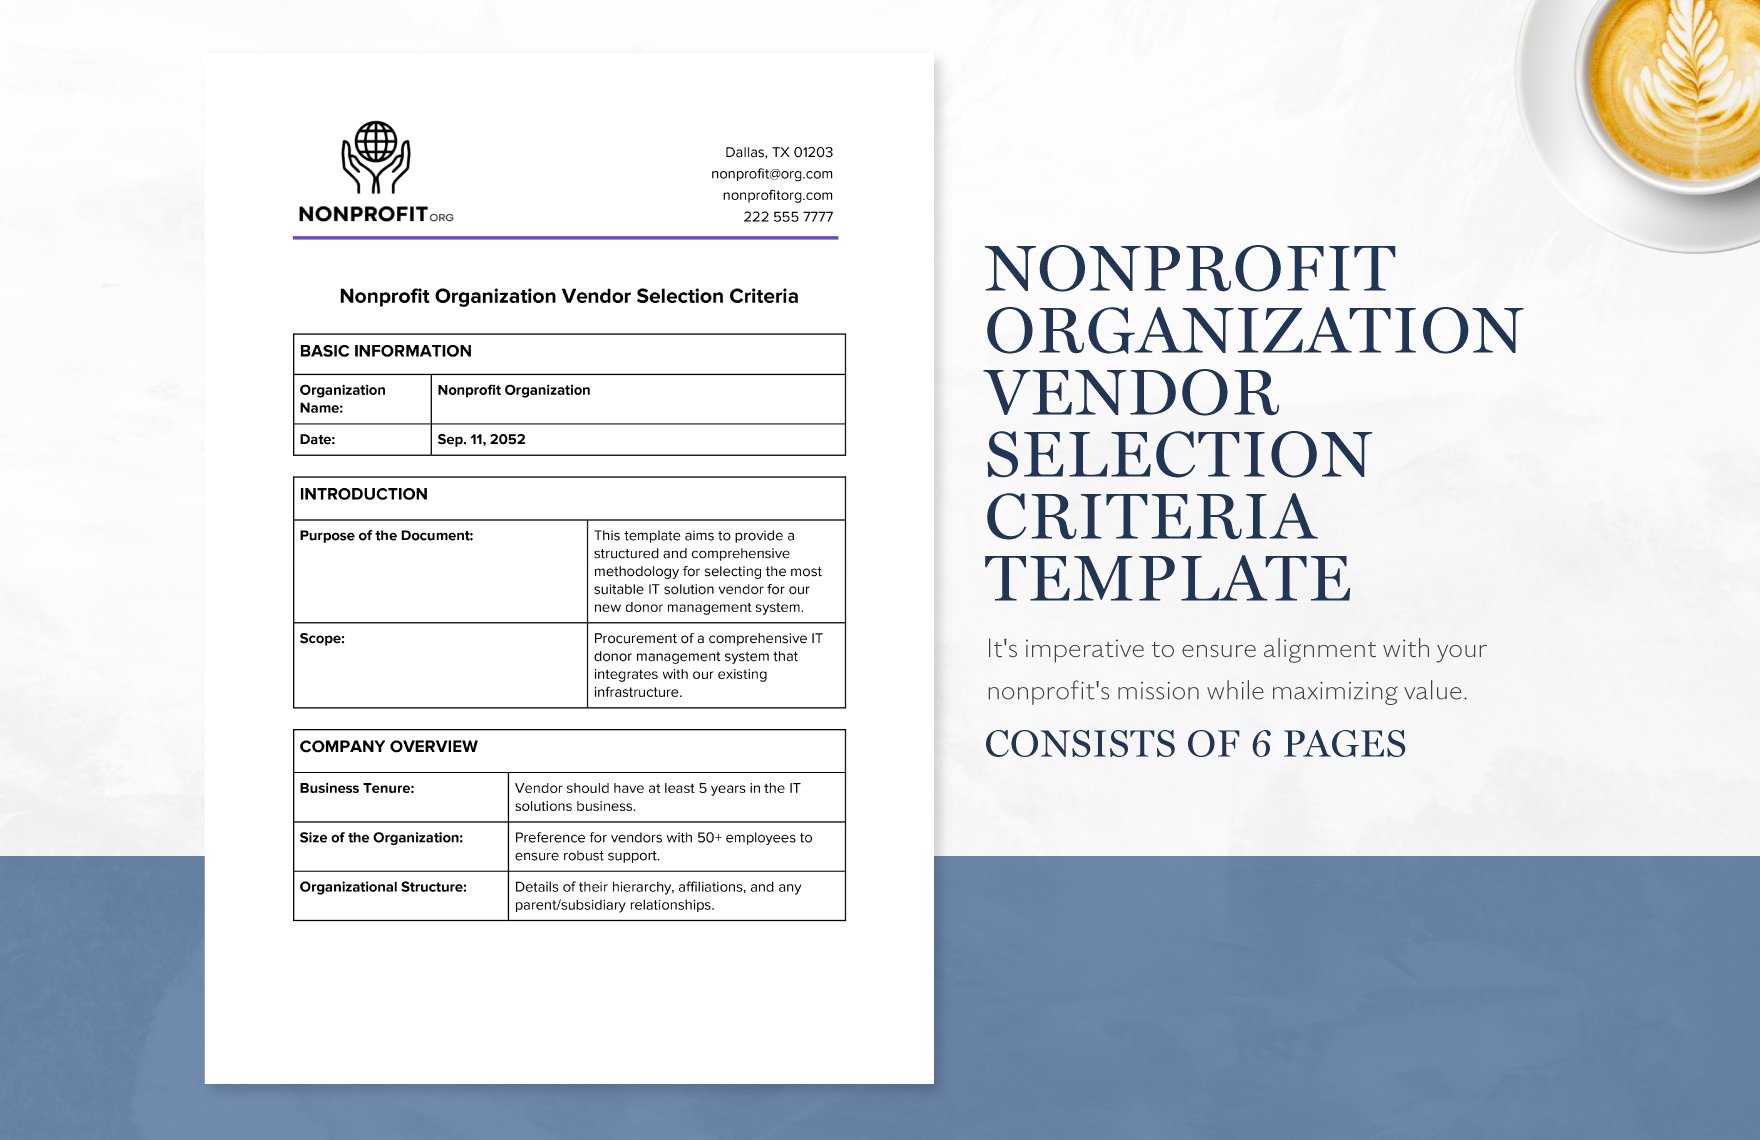 Nonprofit Organization Vendor Selection Criteria Template in Word, Google Docs, PDF